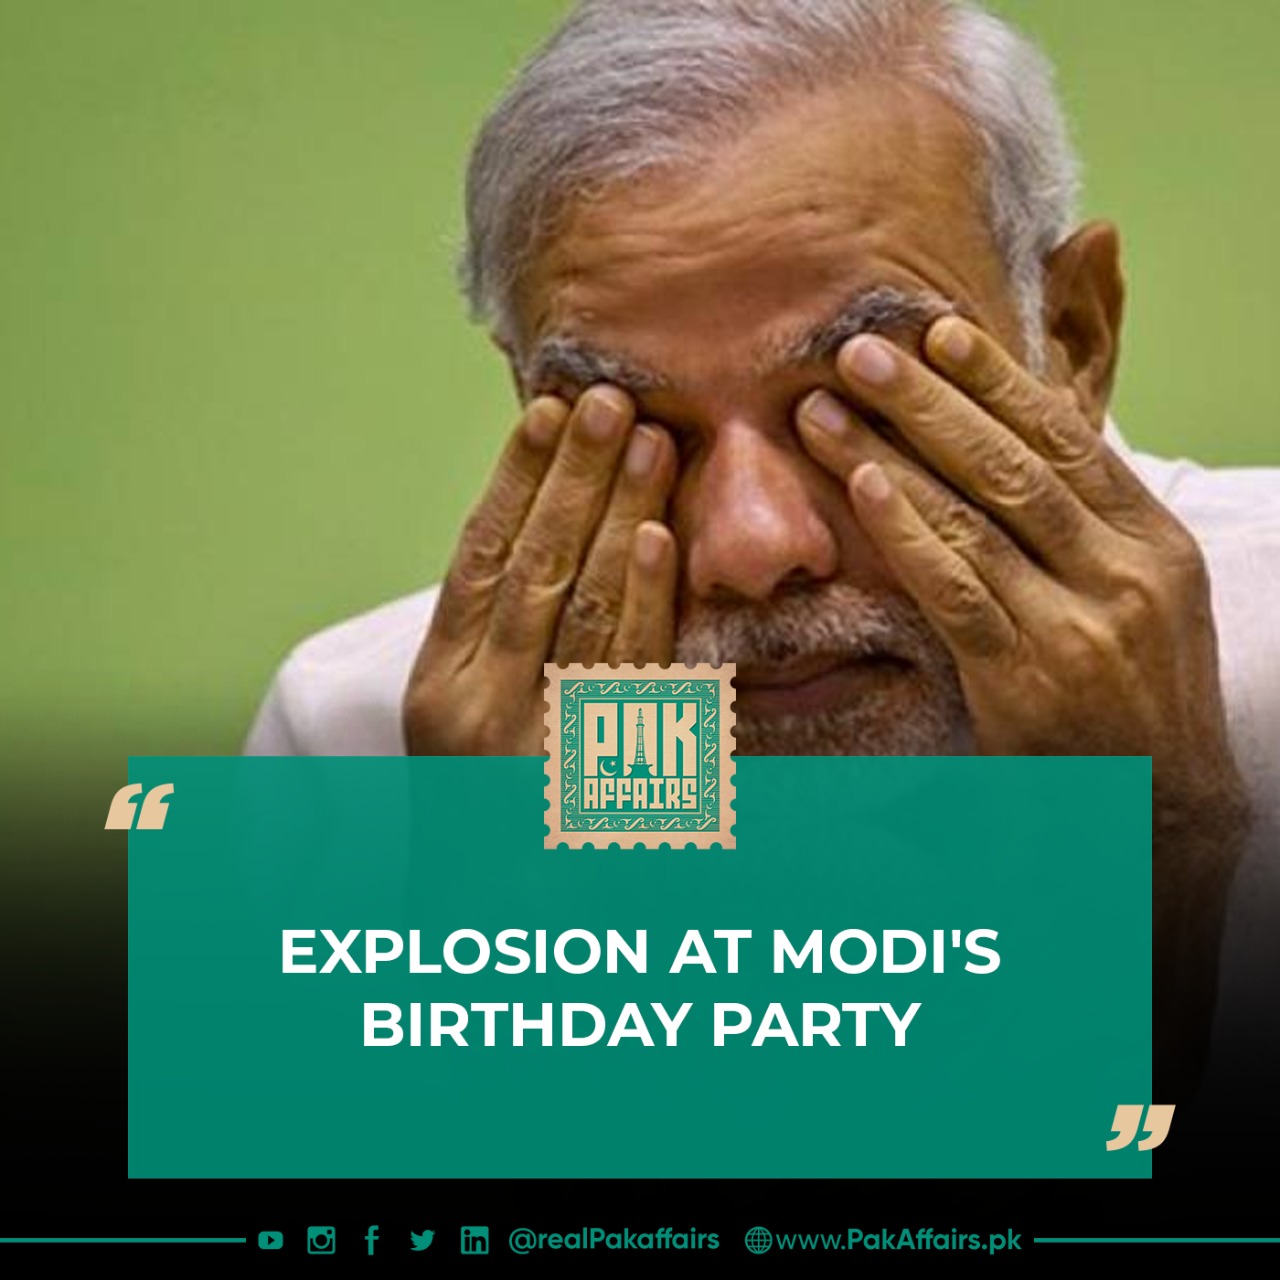 Explosion at Modi's birthday party